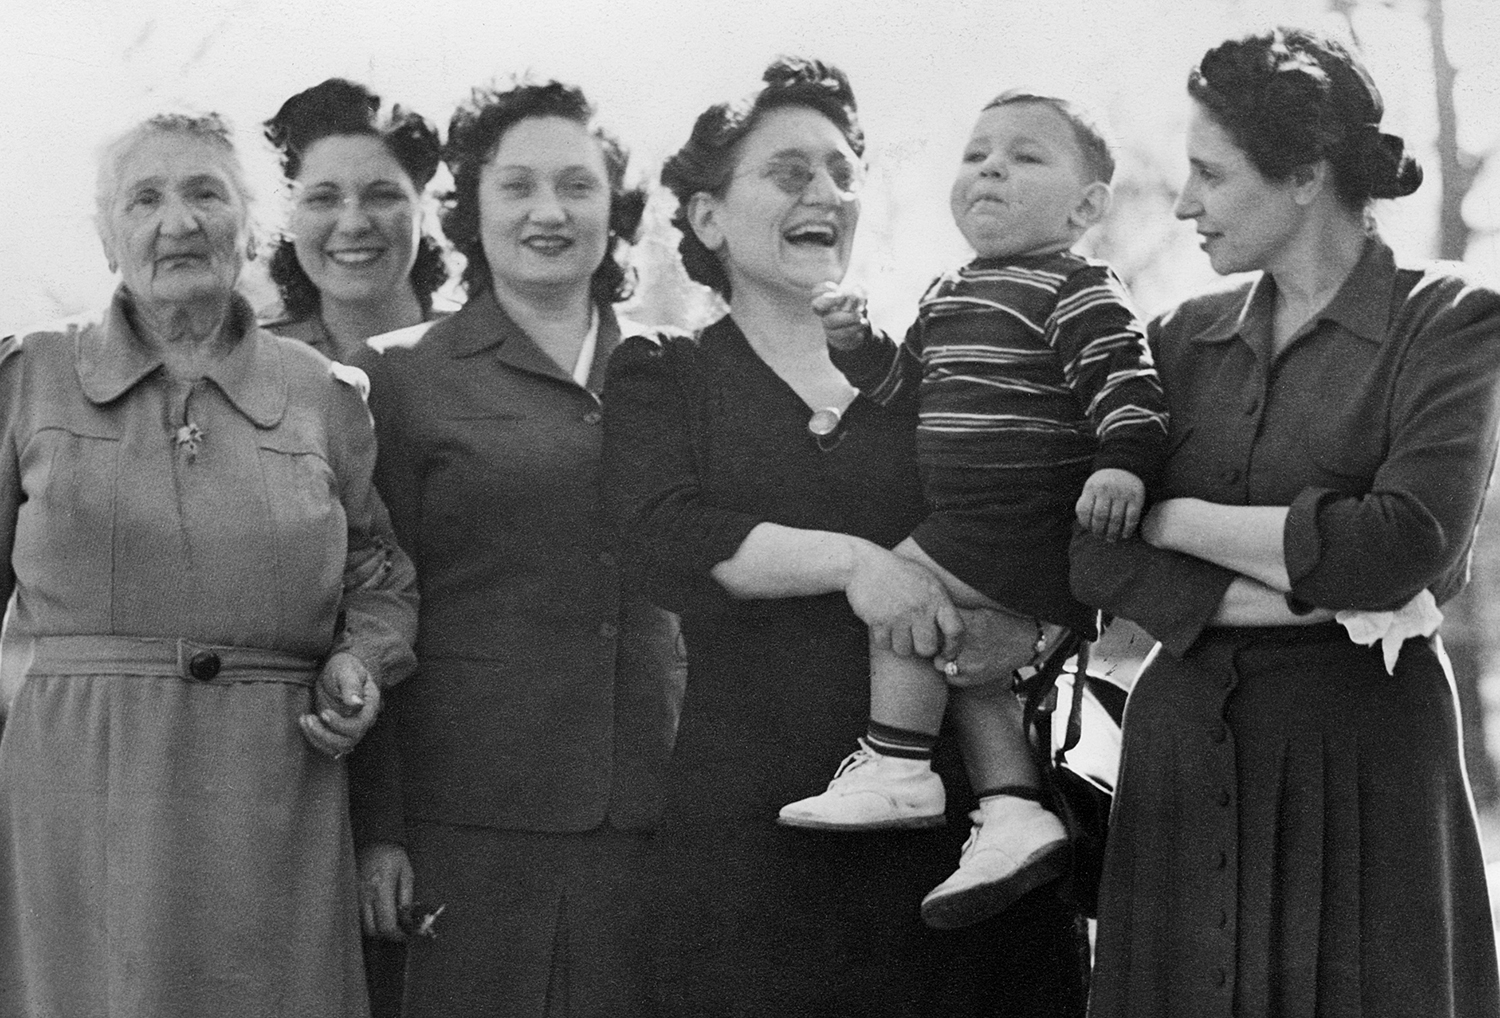 Adalman Women in WWII: Dora, Sylvia, Hannah, Rose and Sylvia